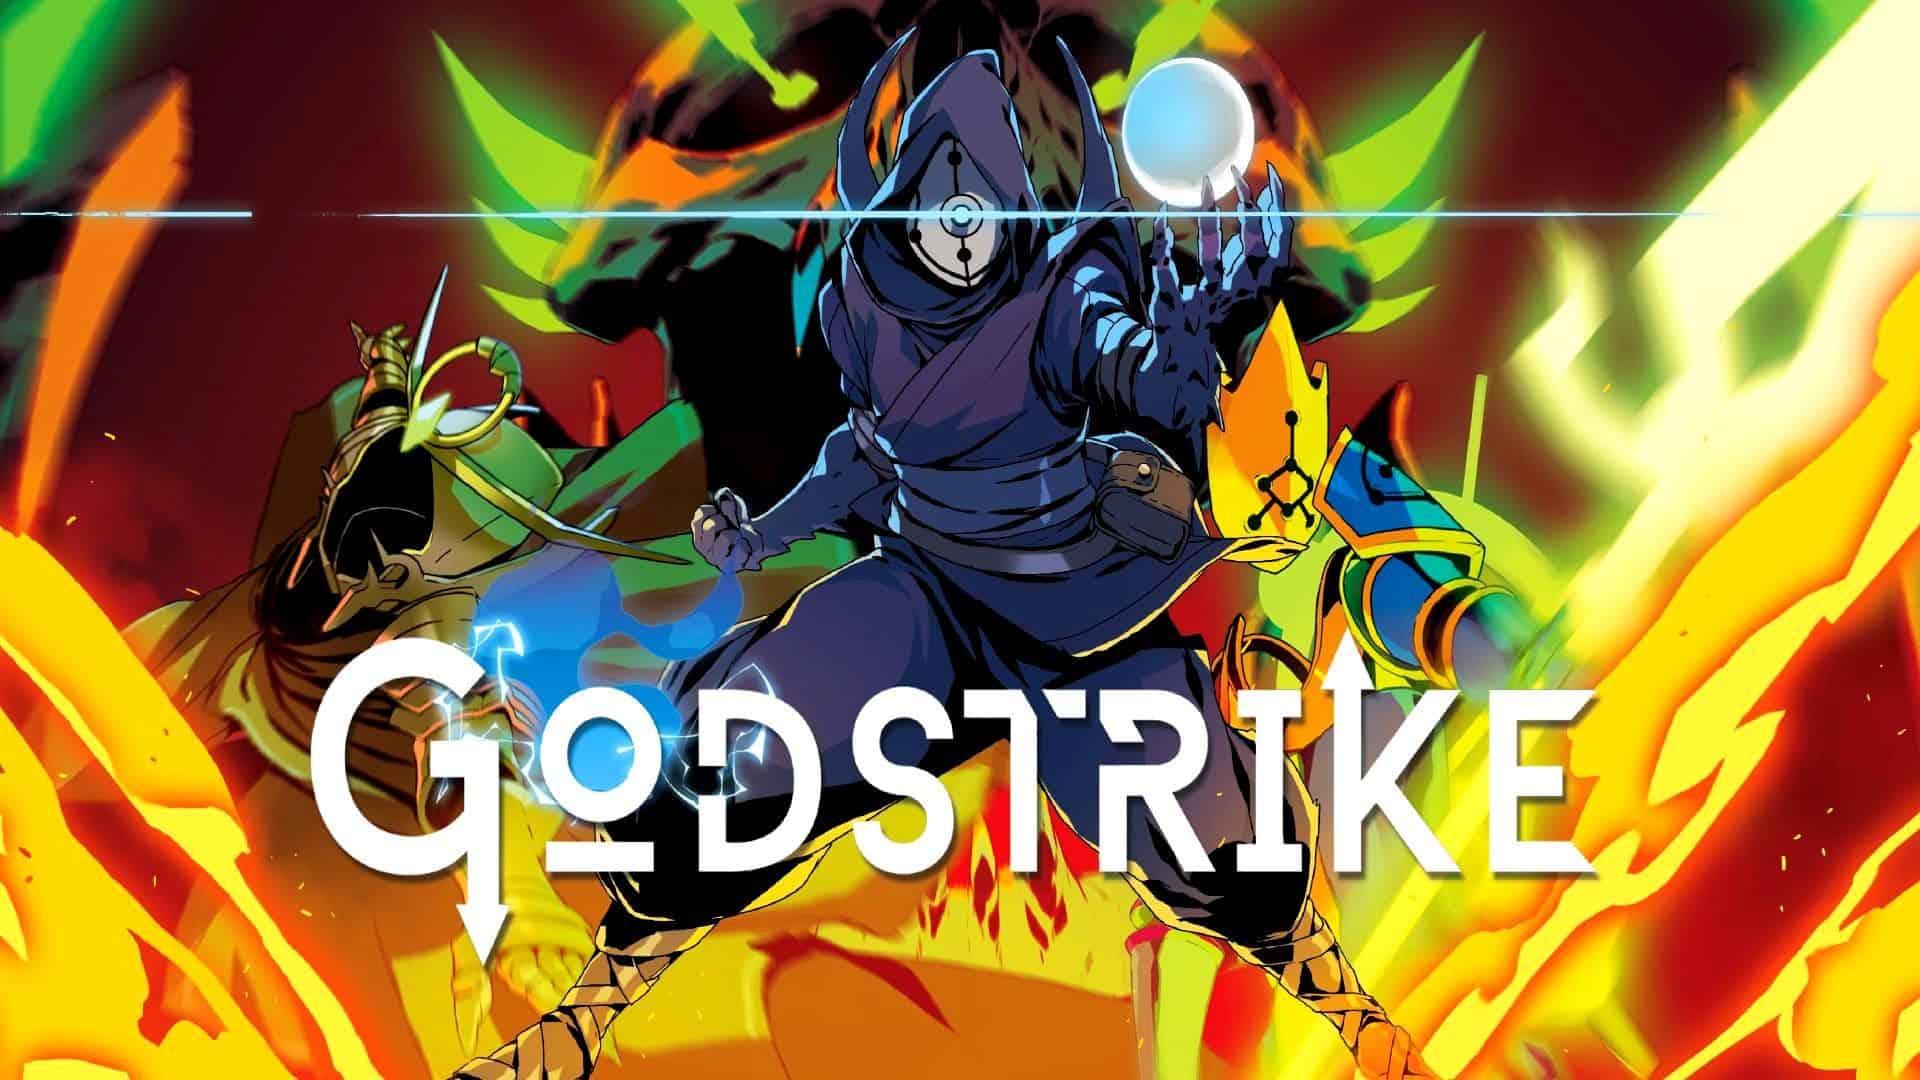 godstrike-featured-image.jpg